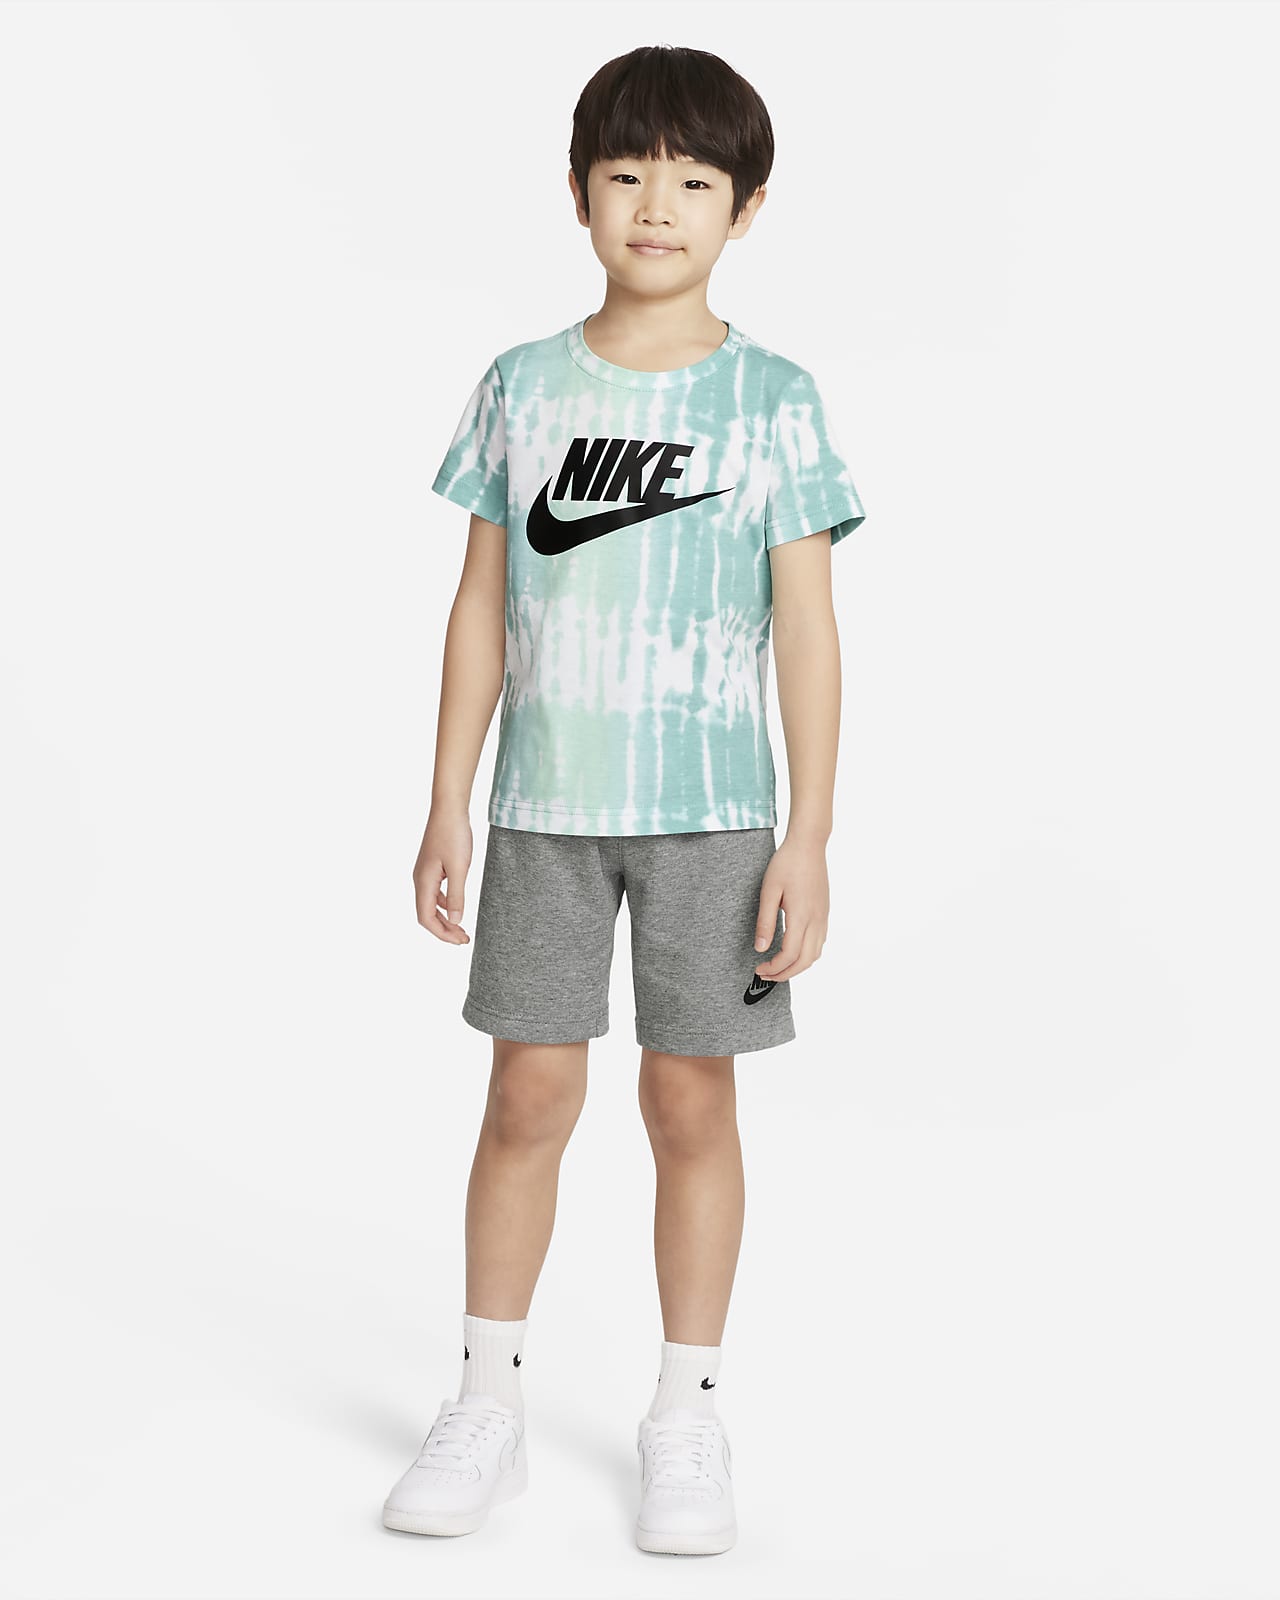 Nike Sportswear Little Kids' T-Shirt and Shorts Set. 